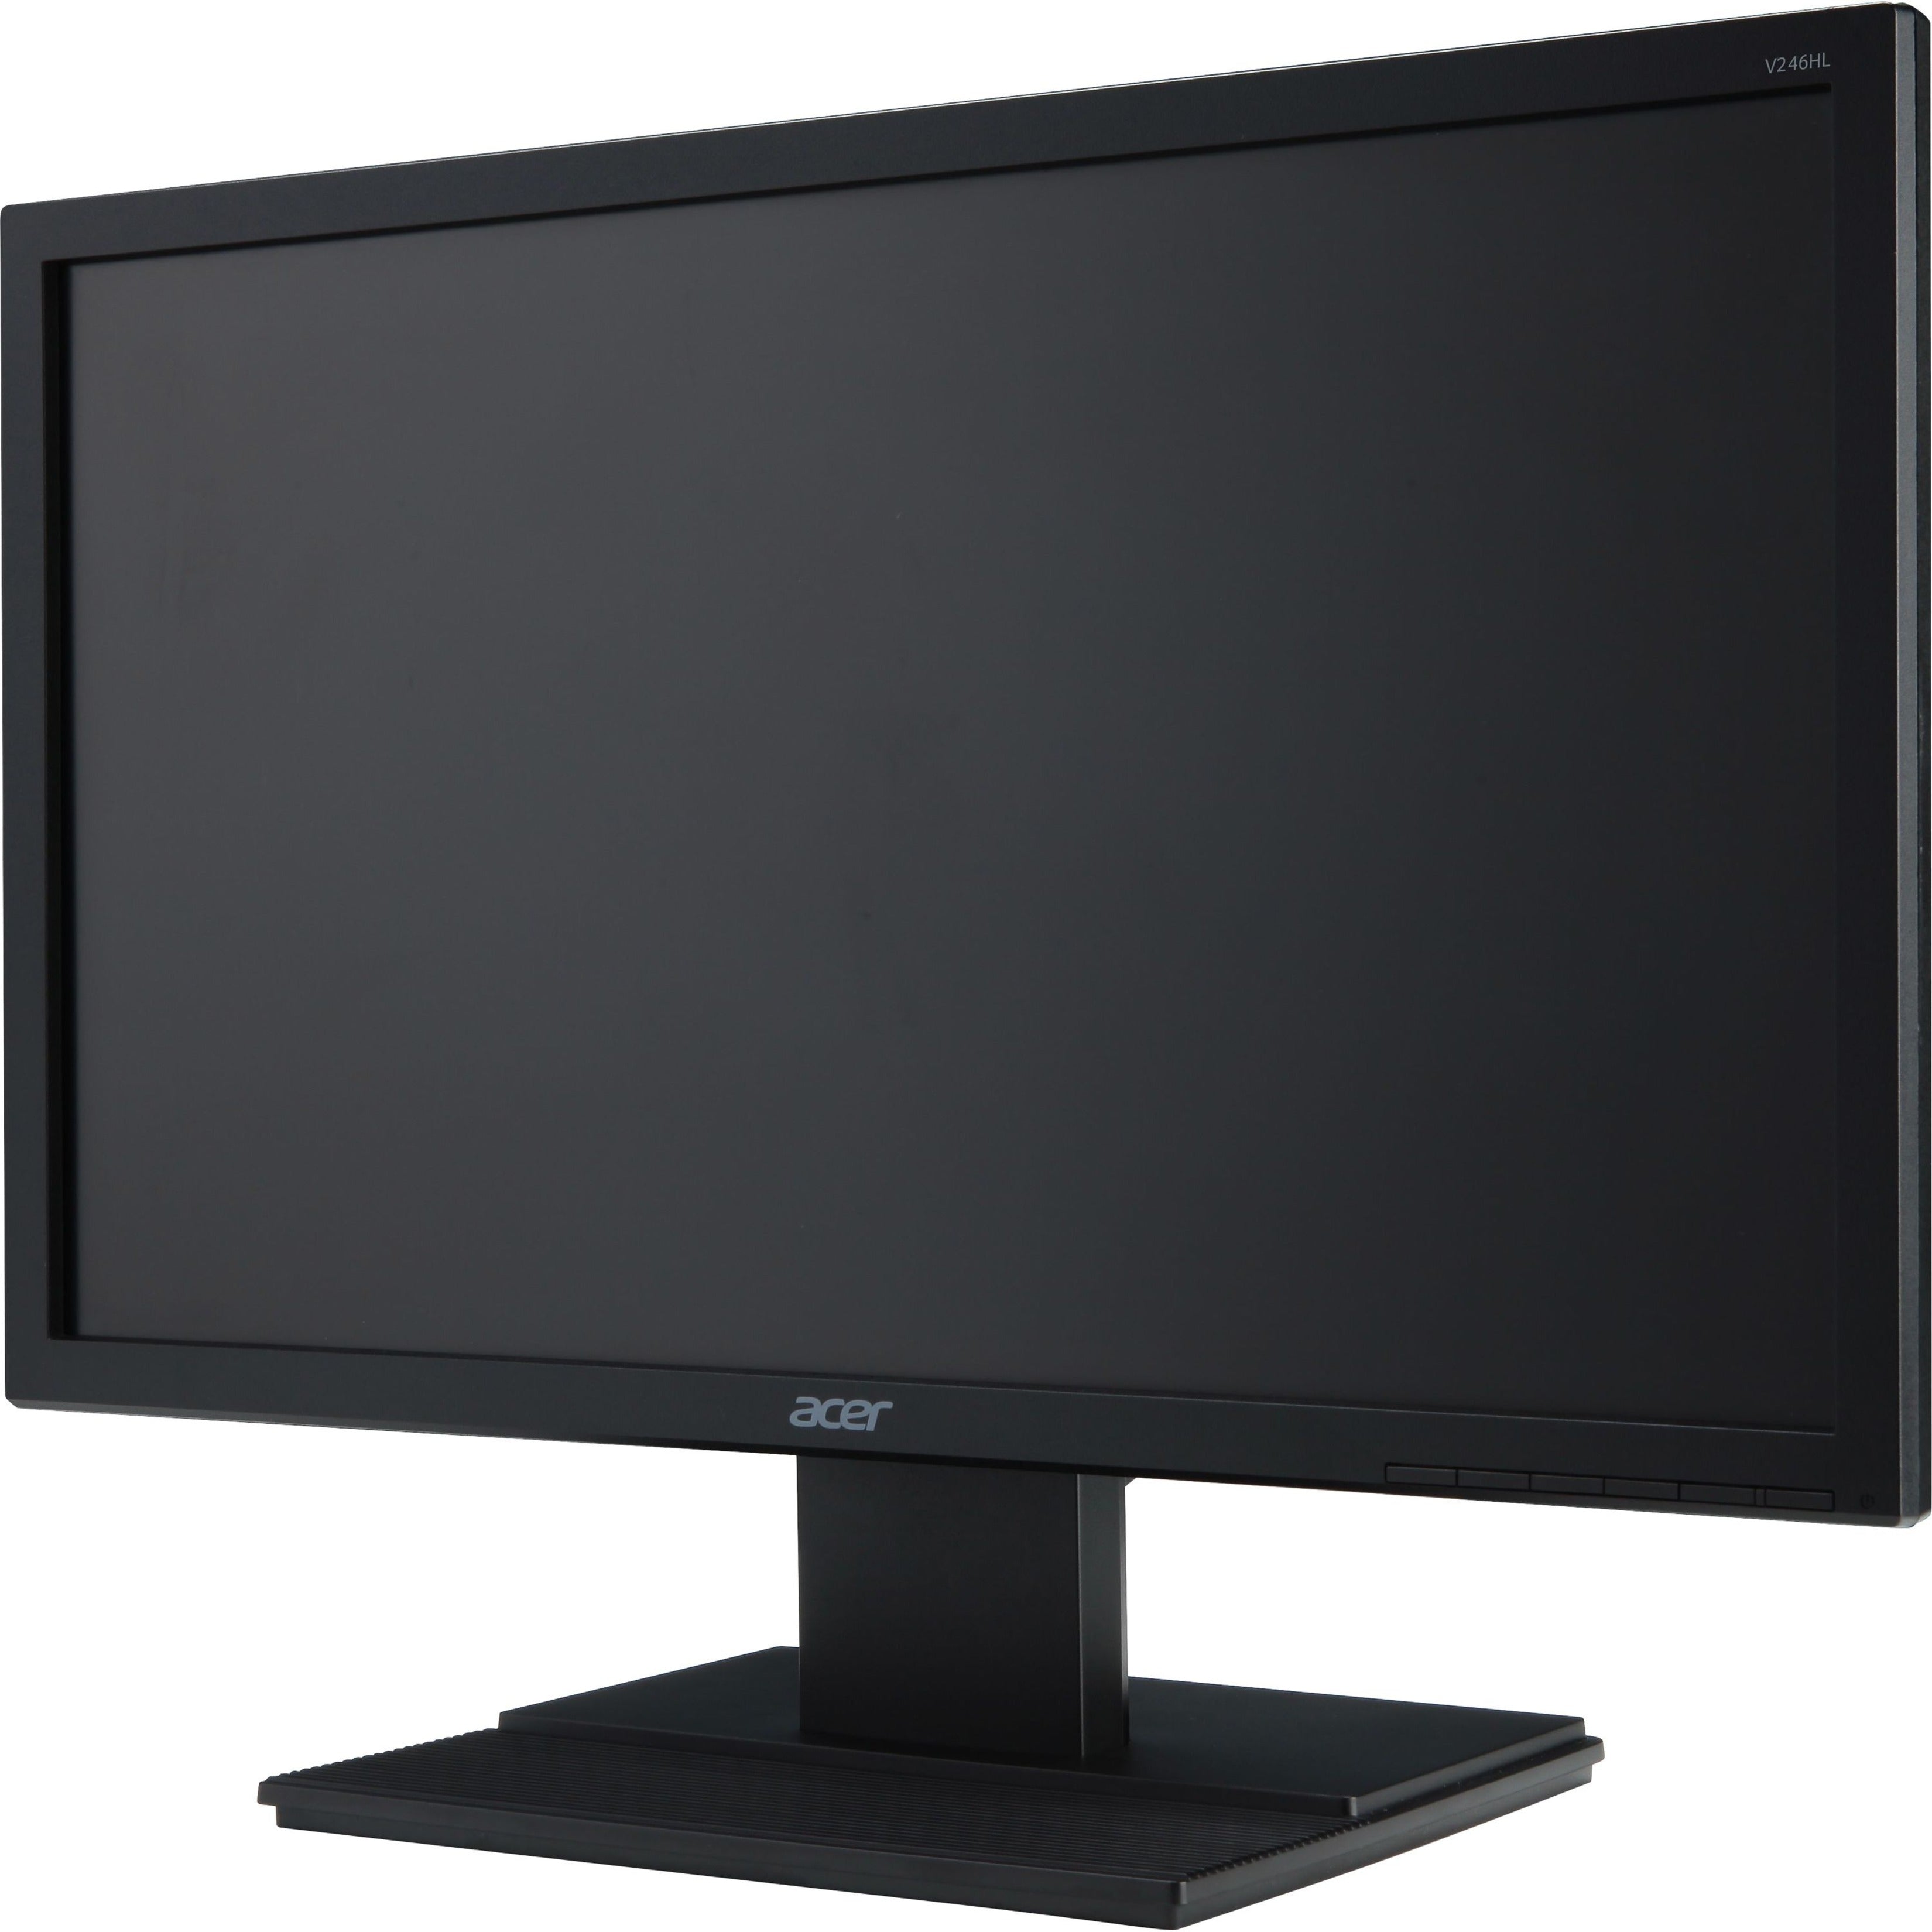 Acer UM.FV6AA.004 V246HL Widescreen LCD Monitor, Full HD, 24, 5ms, 100,000,000:1 Contrast Ratio, 250 Nit Brightness